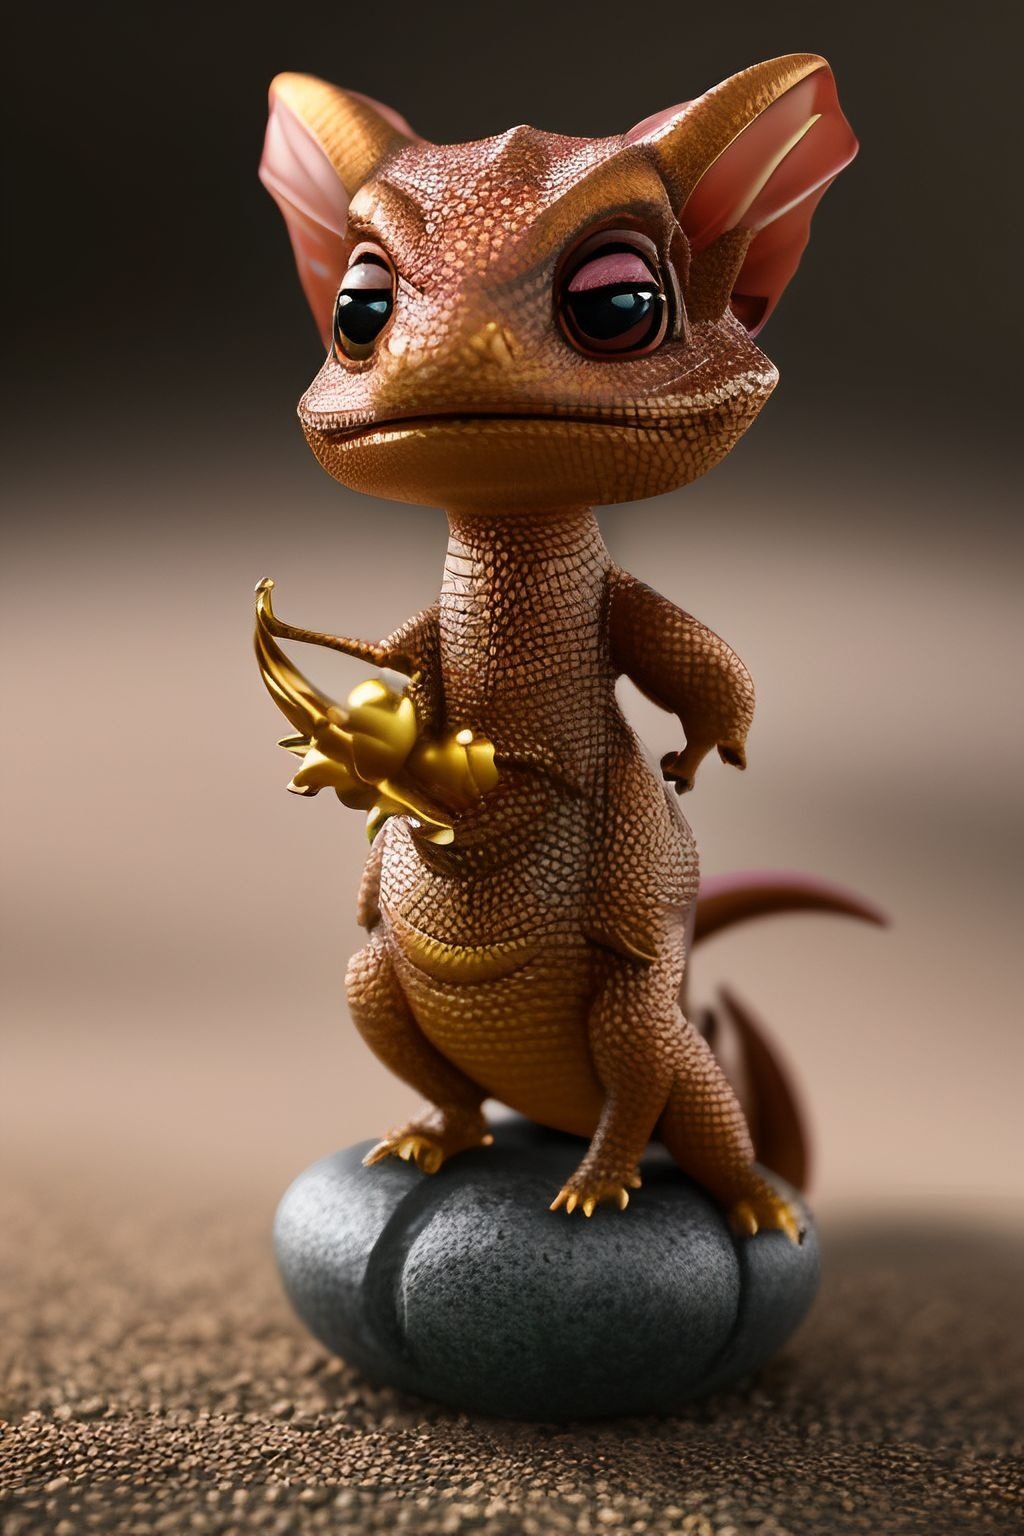 Prompt: Tilt shift shot of a cute chibi figurine dragon living in luxury